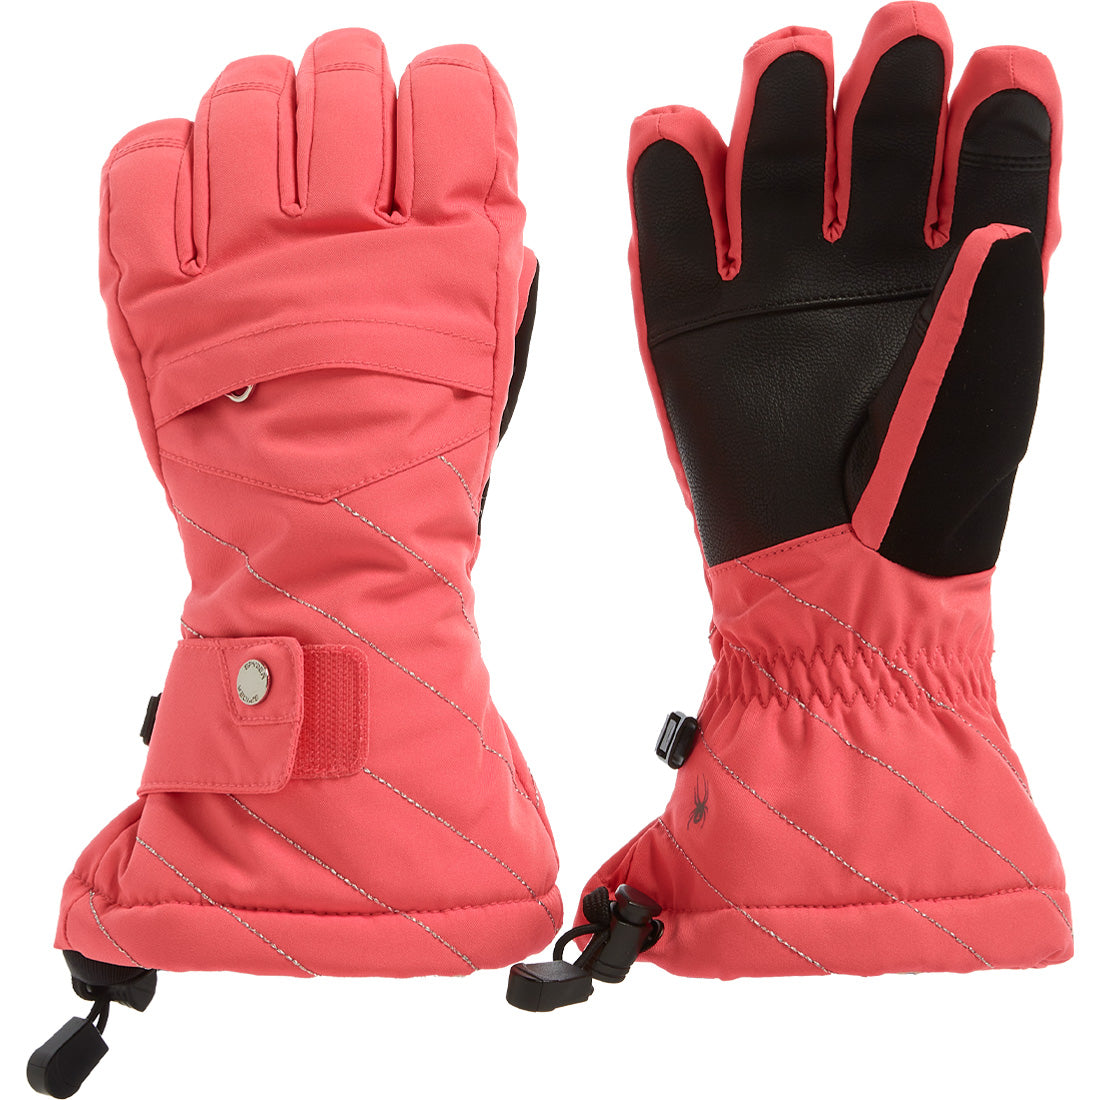 Spyder Synthesis Ski Glove (Past Season) - Girls